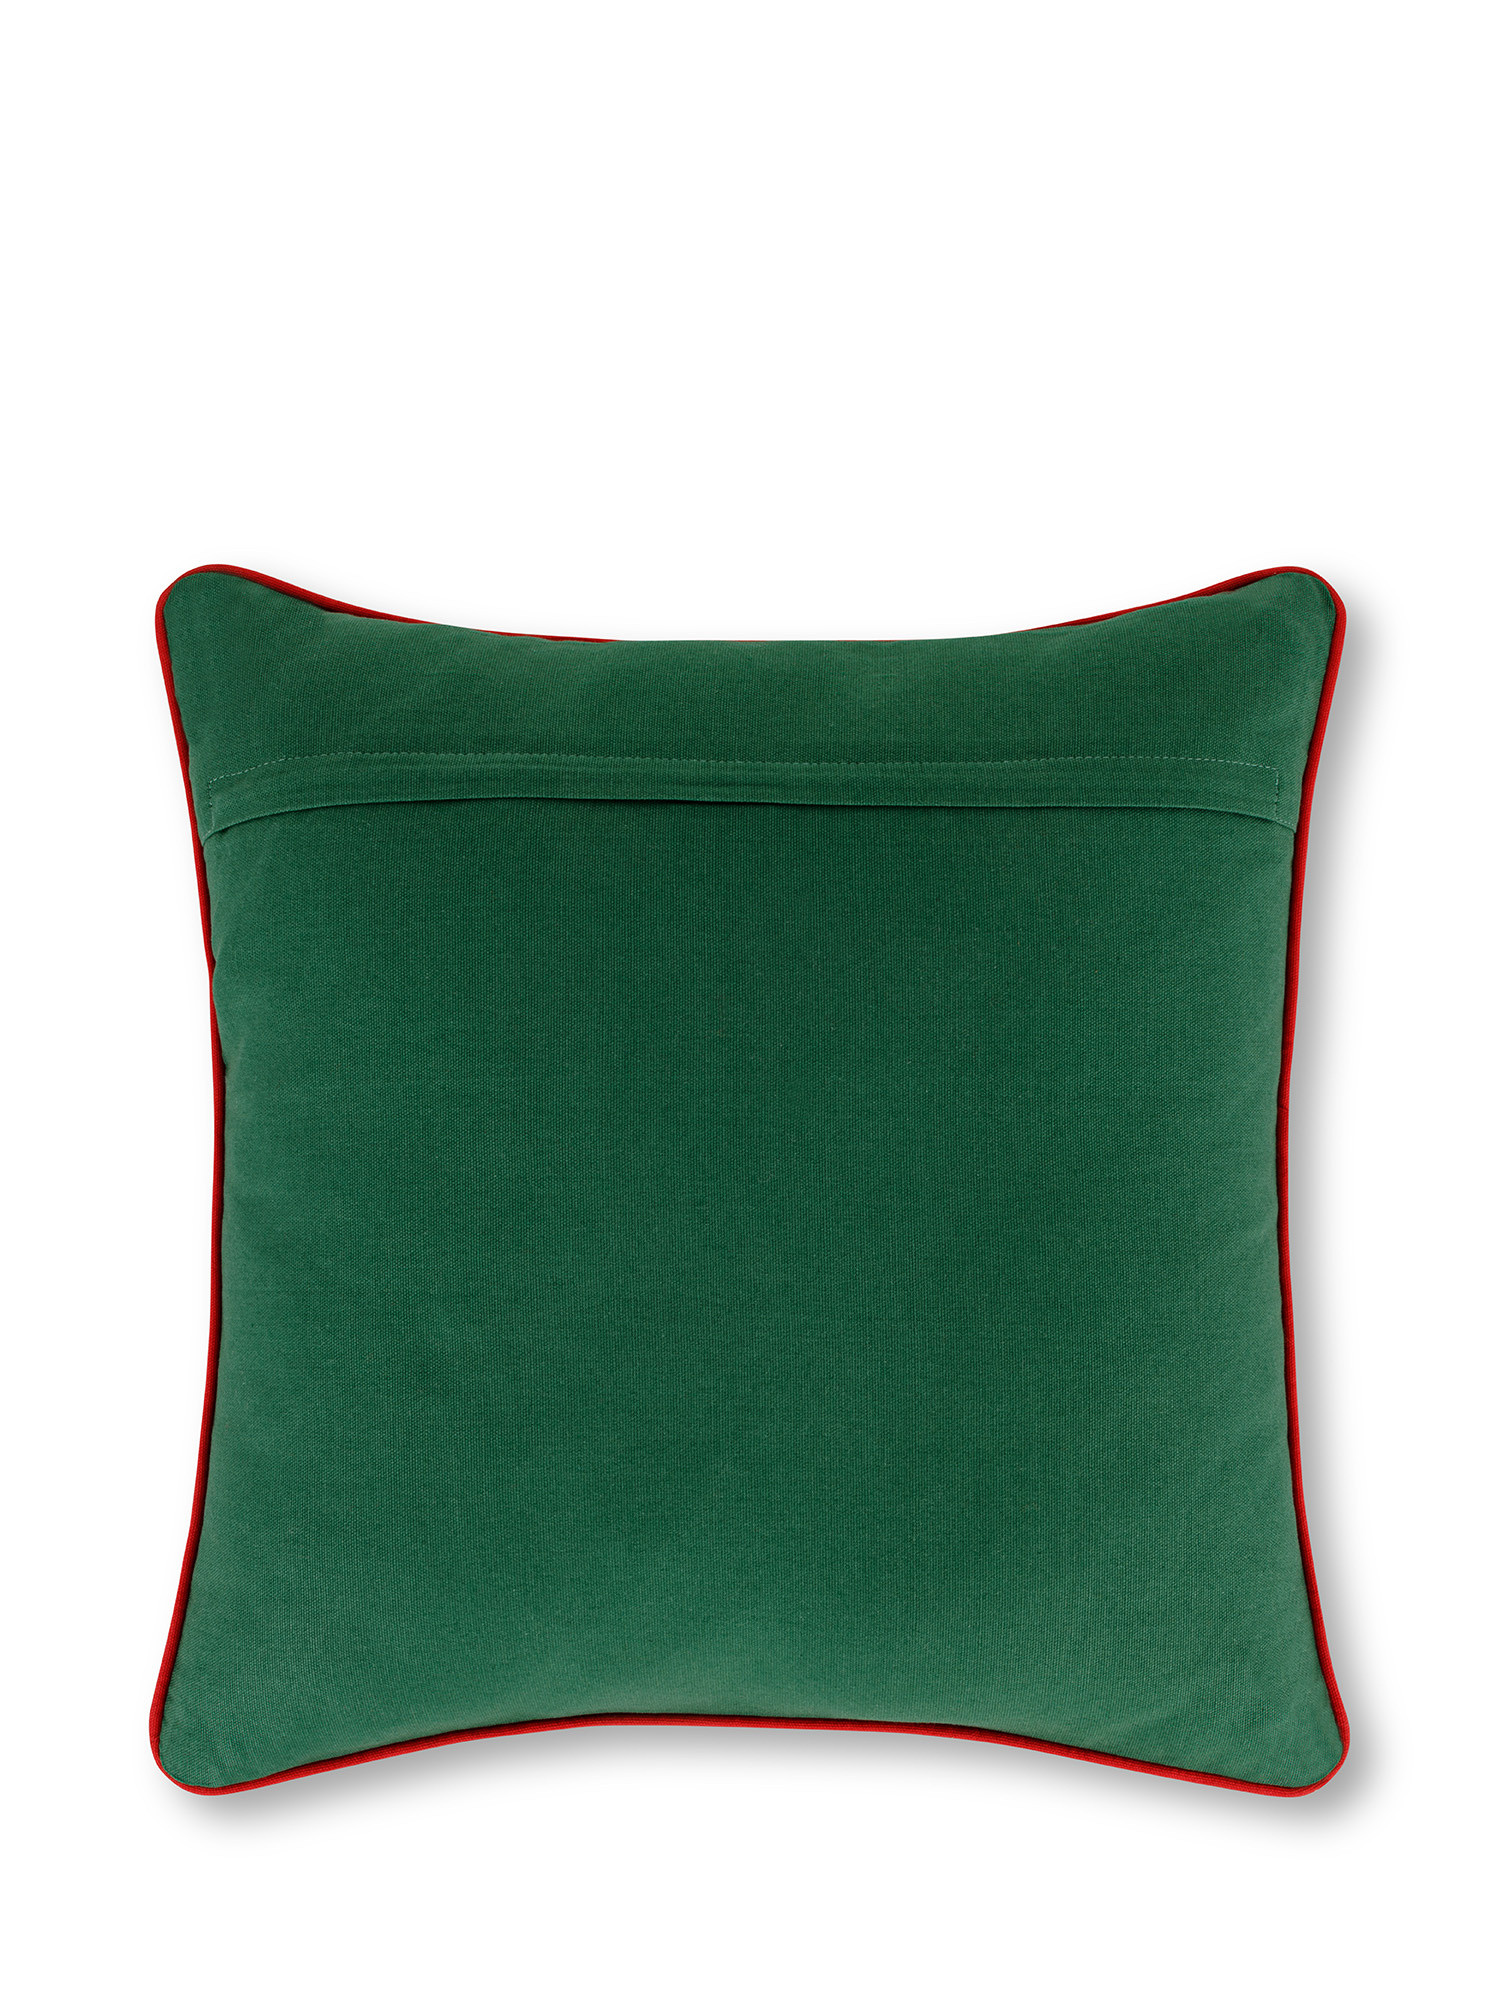 Cuscino ricamato ghirlanda natalizia 45x45 cm, Verde, large image number 1